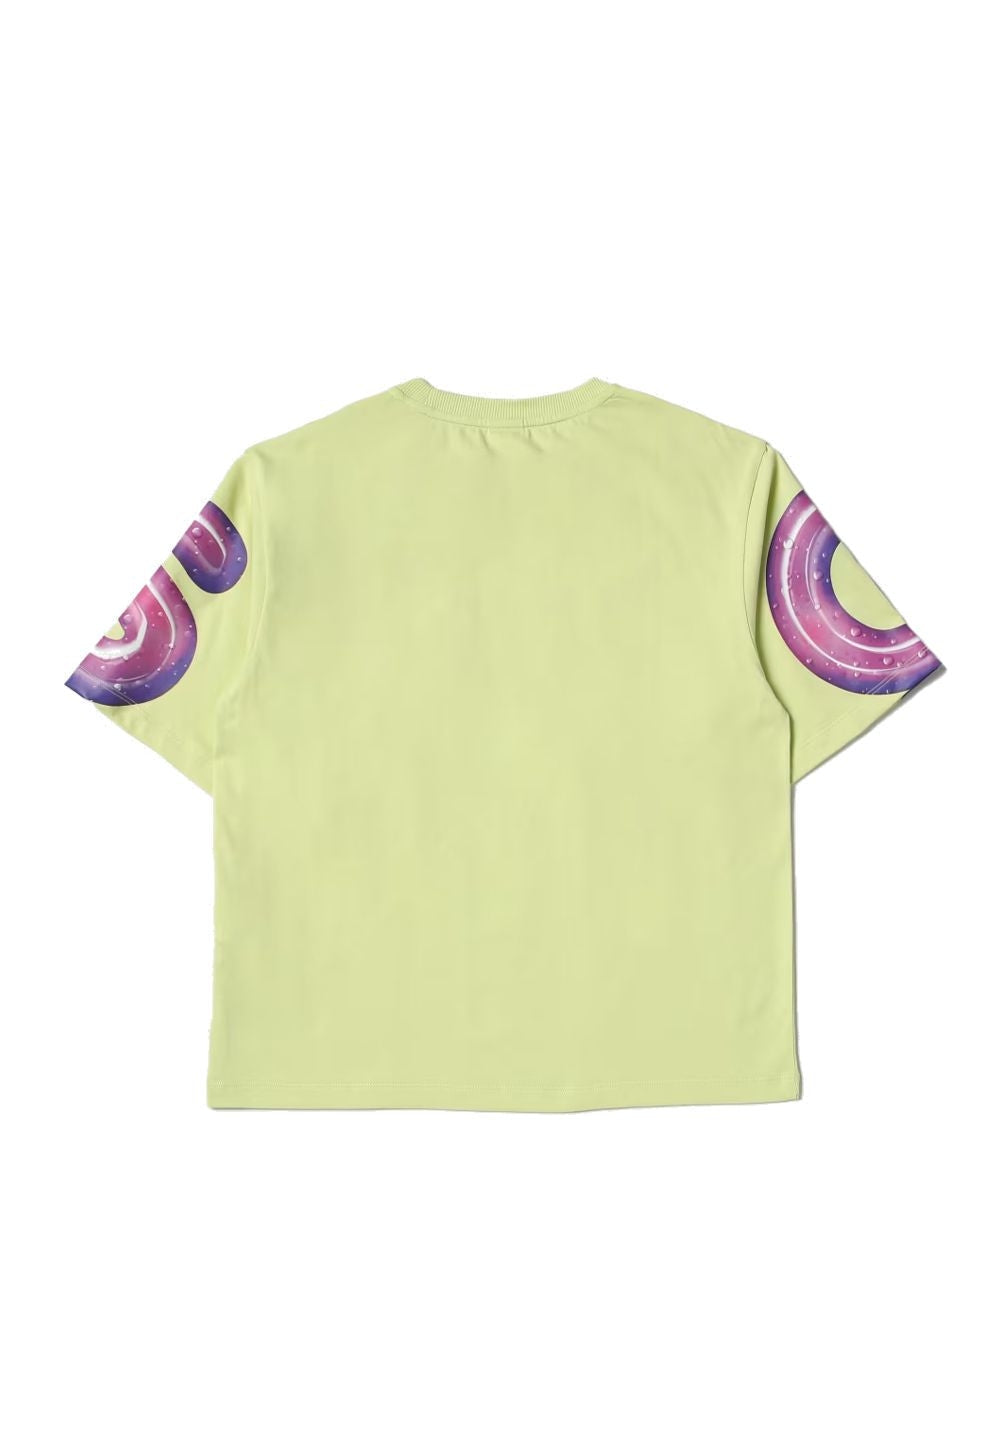 T-shirt senape per bambino - Primamoda kids